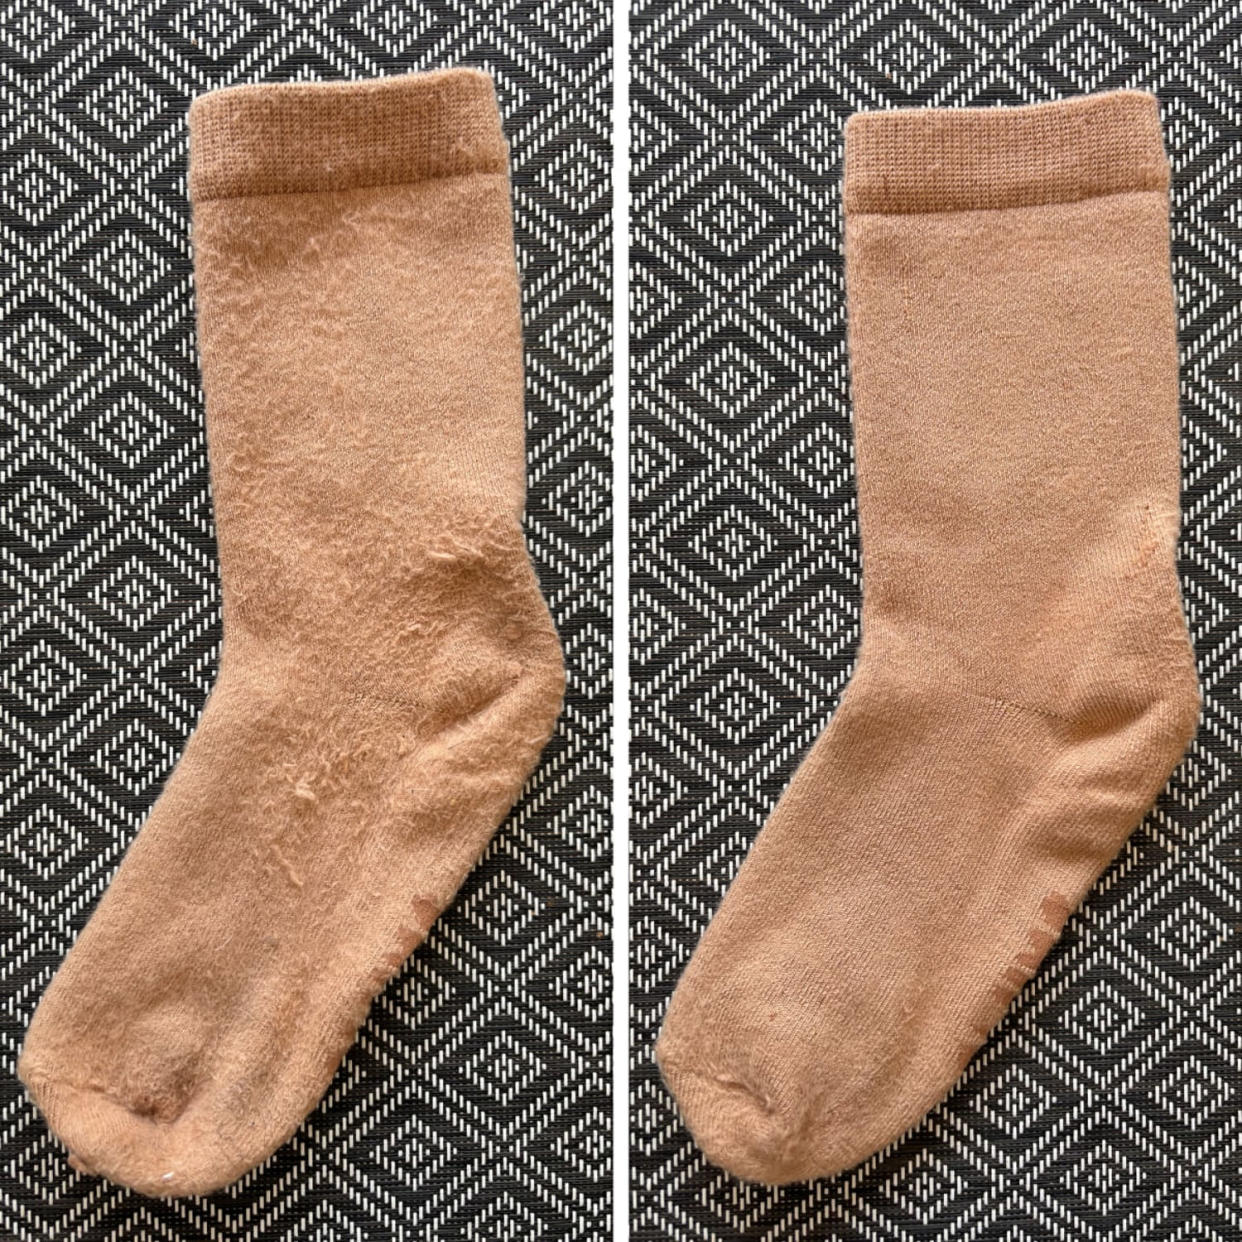 Skims Everyday Crew Socks before using a fabric shaver (left) and after using a fabric shaver to get rid of pilling (right). (Courtesy Zoe Malin)